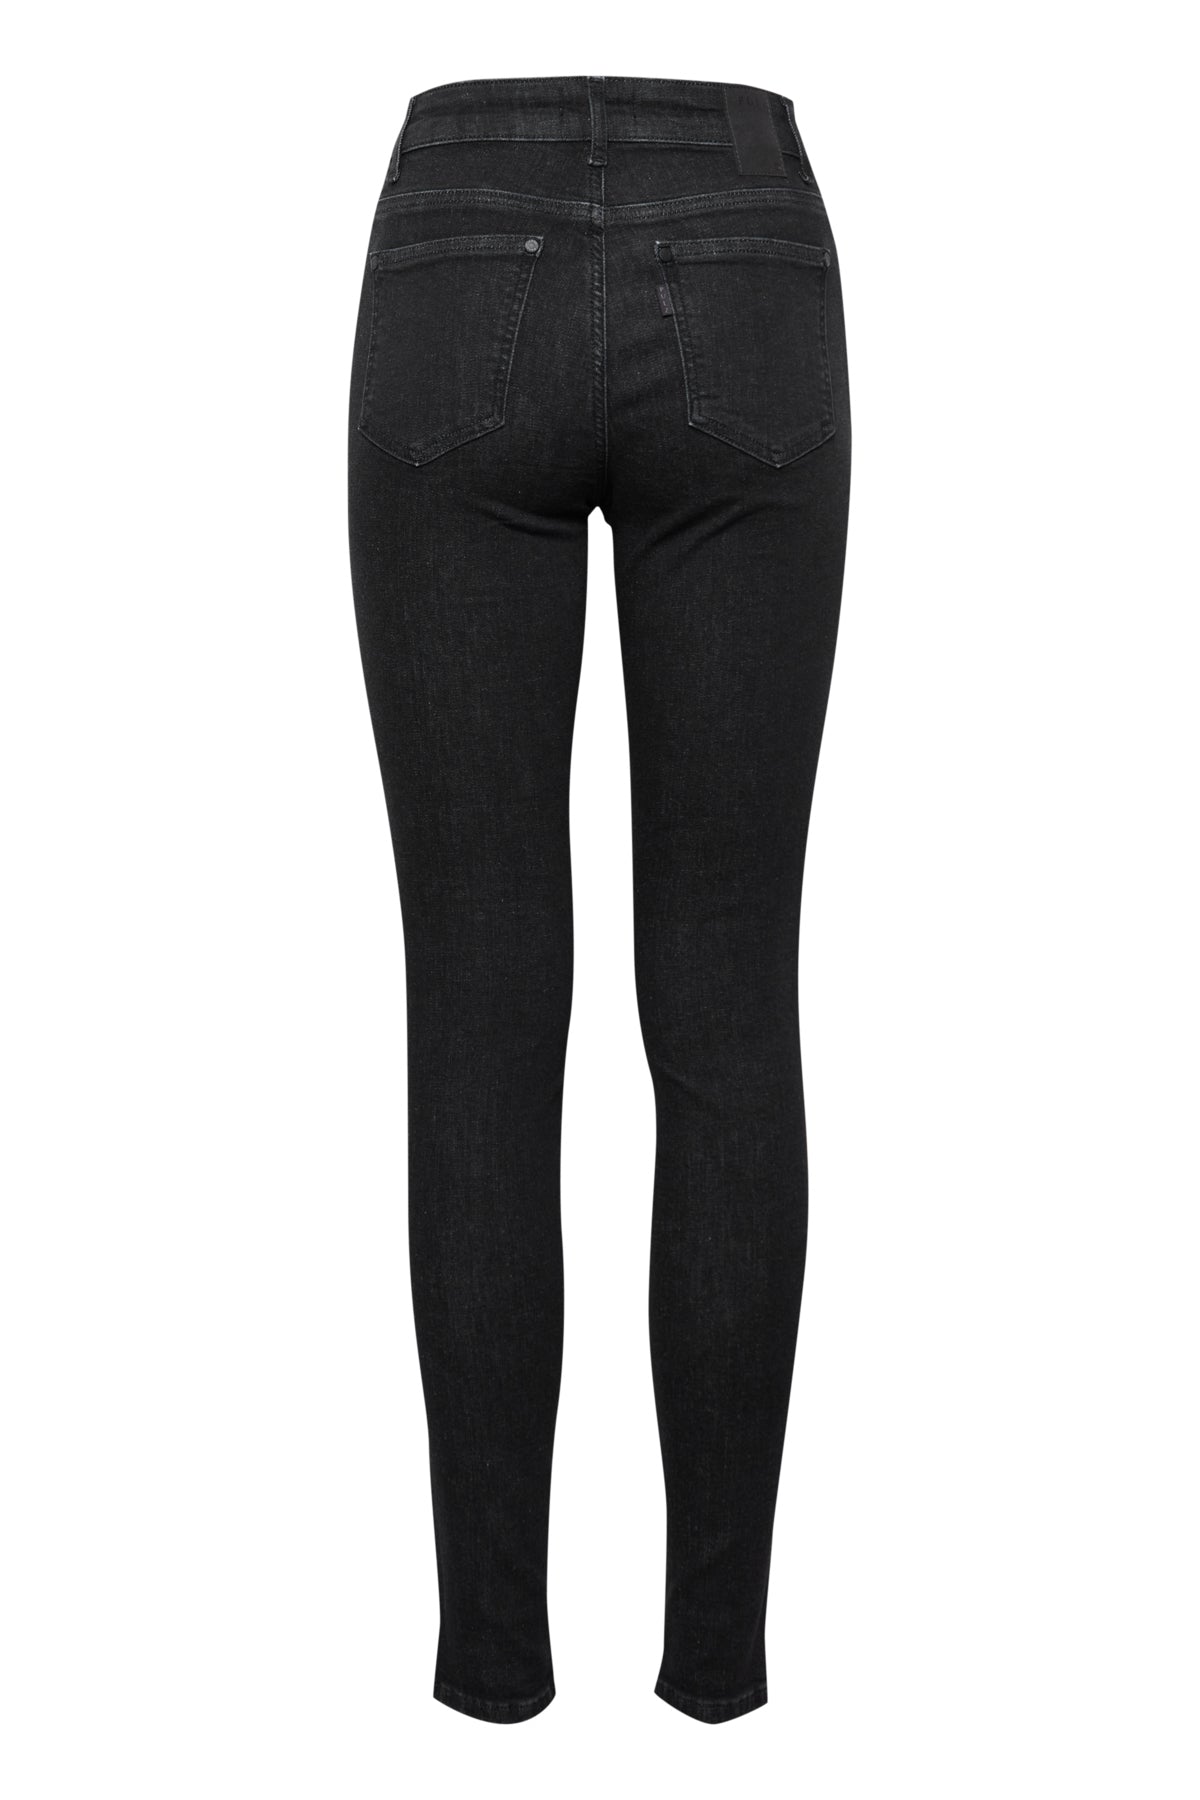 Pulz Emma Skinny Jeans - Black